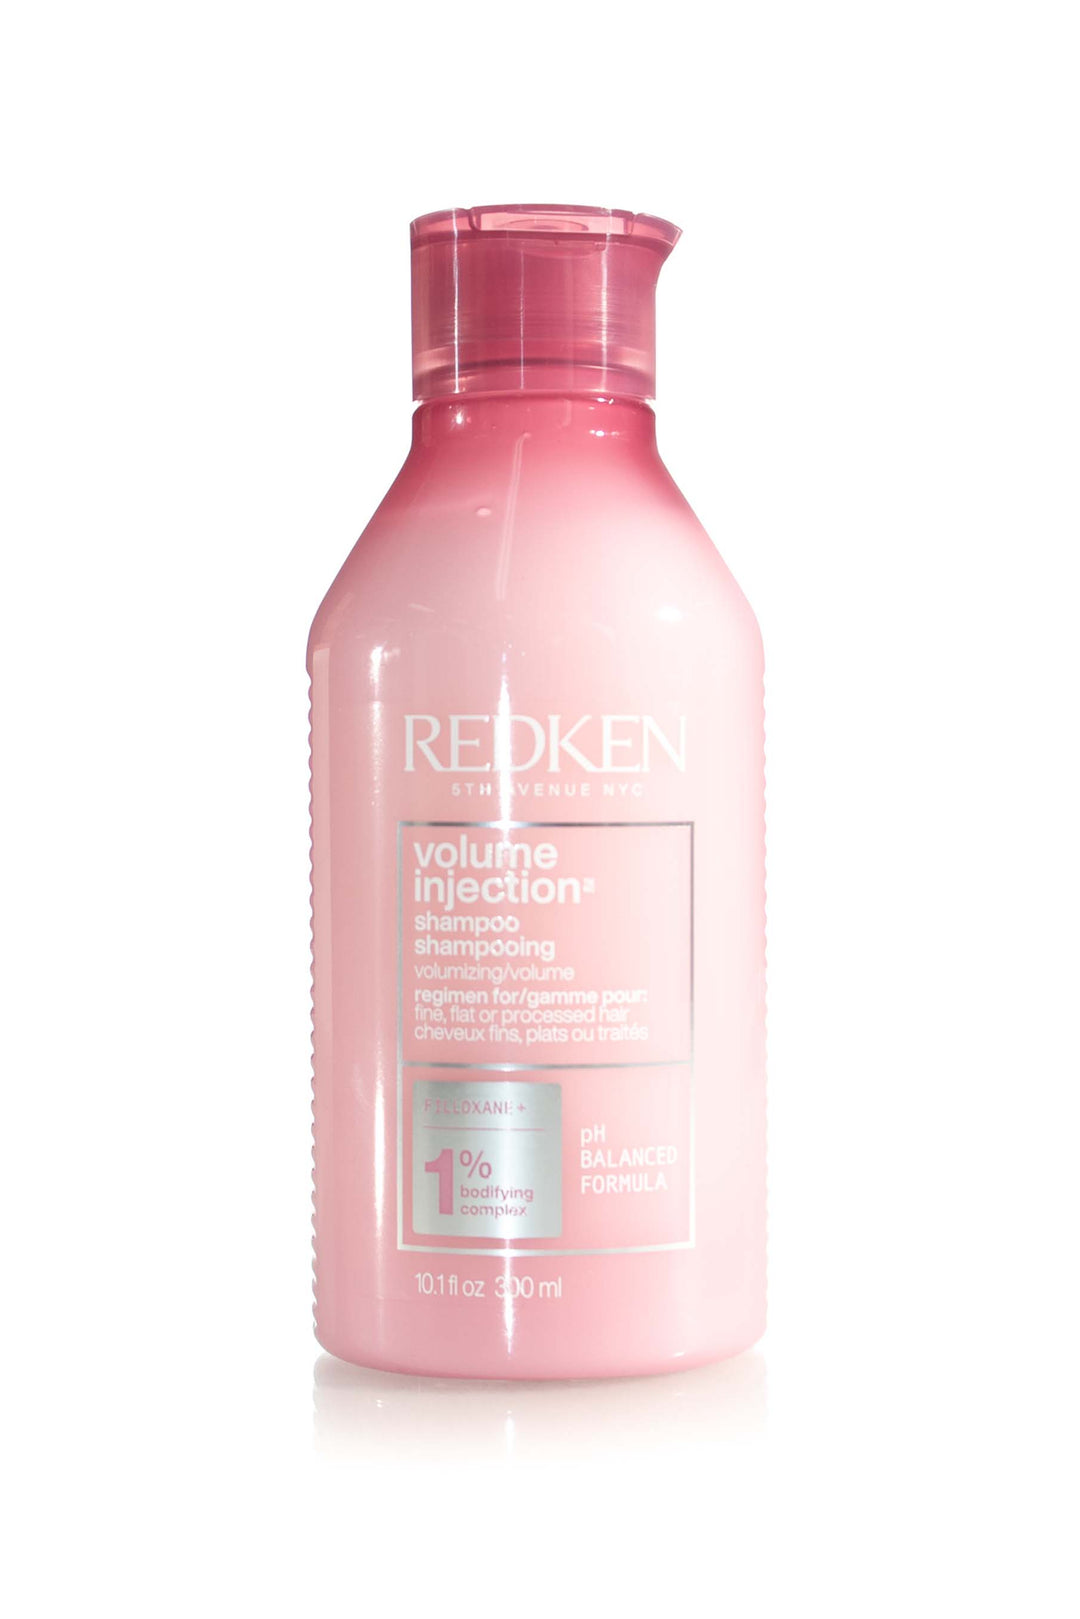 redken-volume-injection-shampoo-300ml